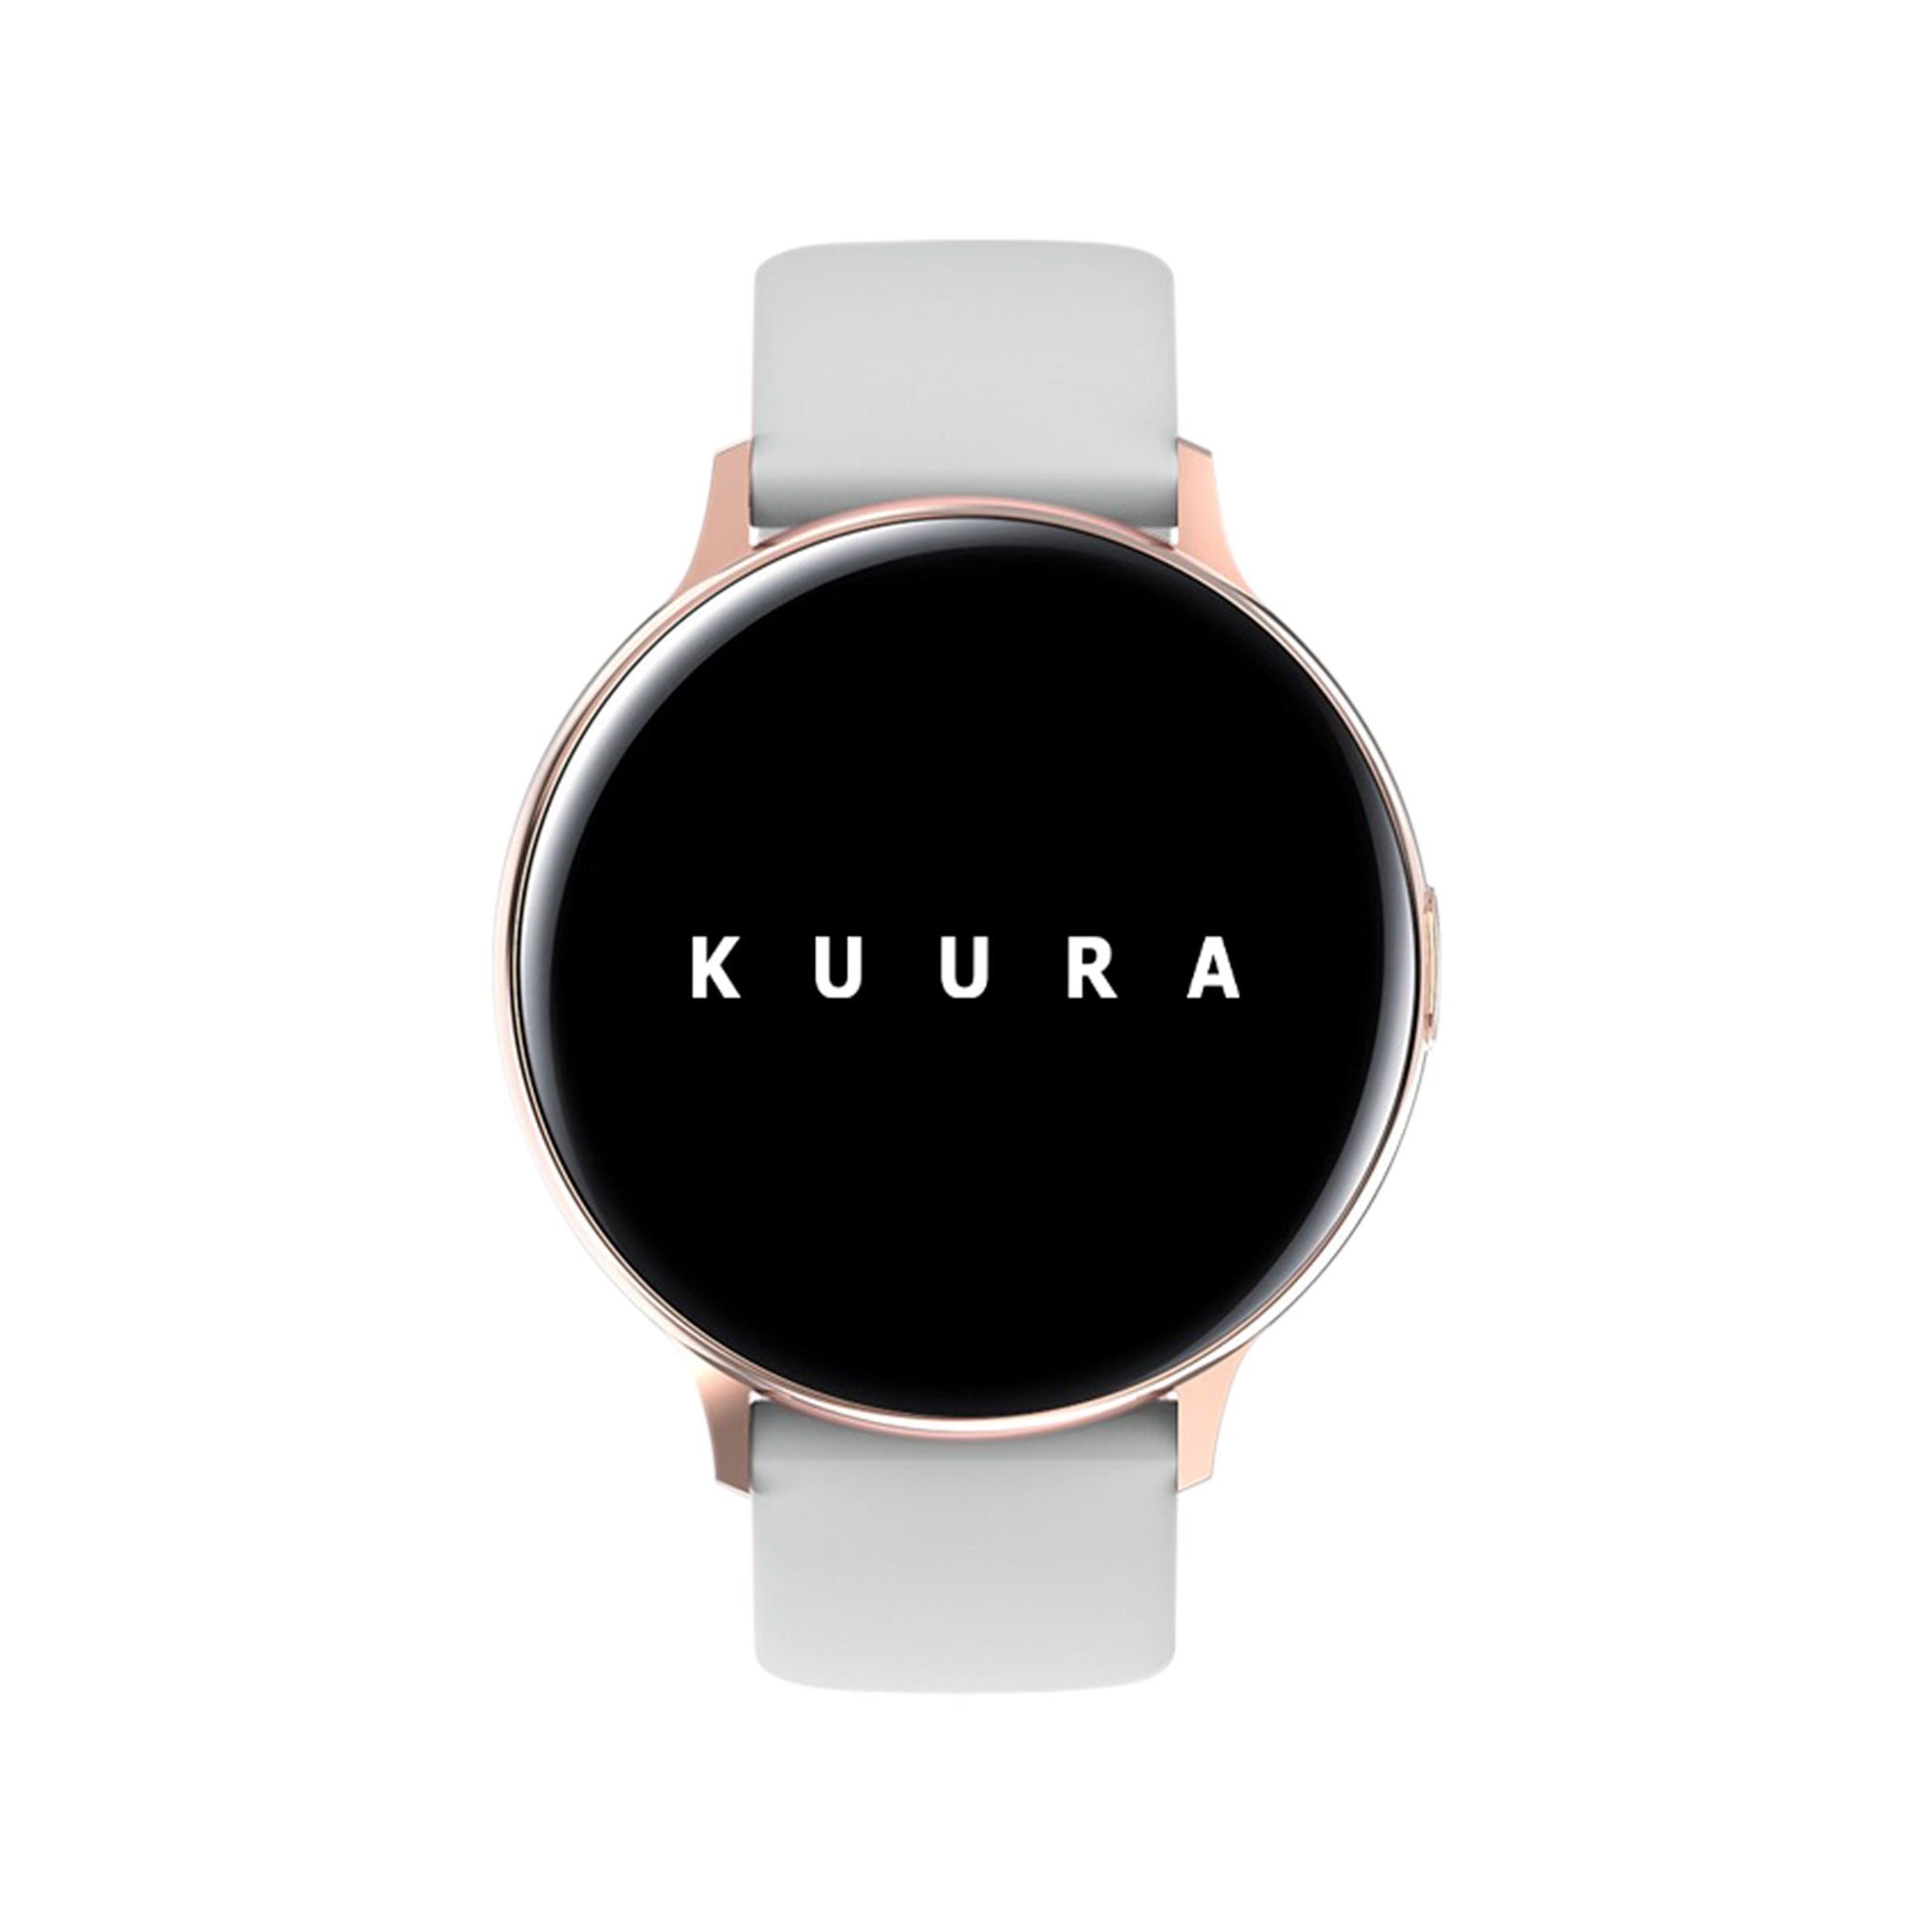 Cмарт часы Kuura FW5